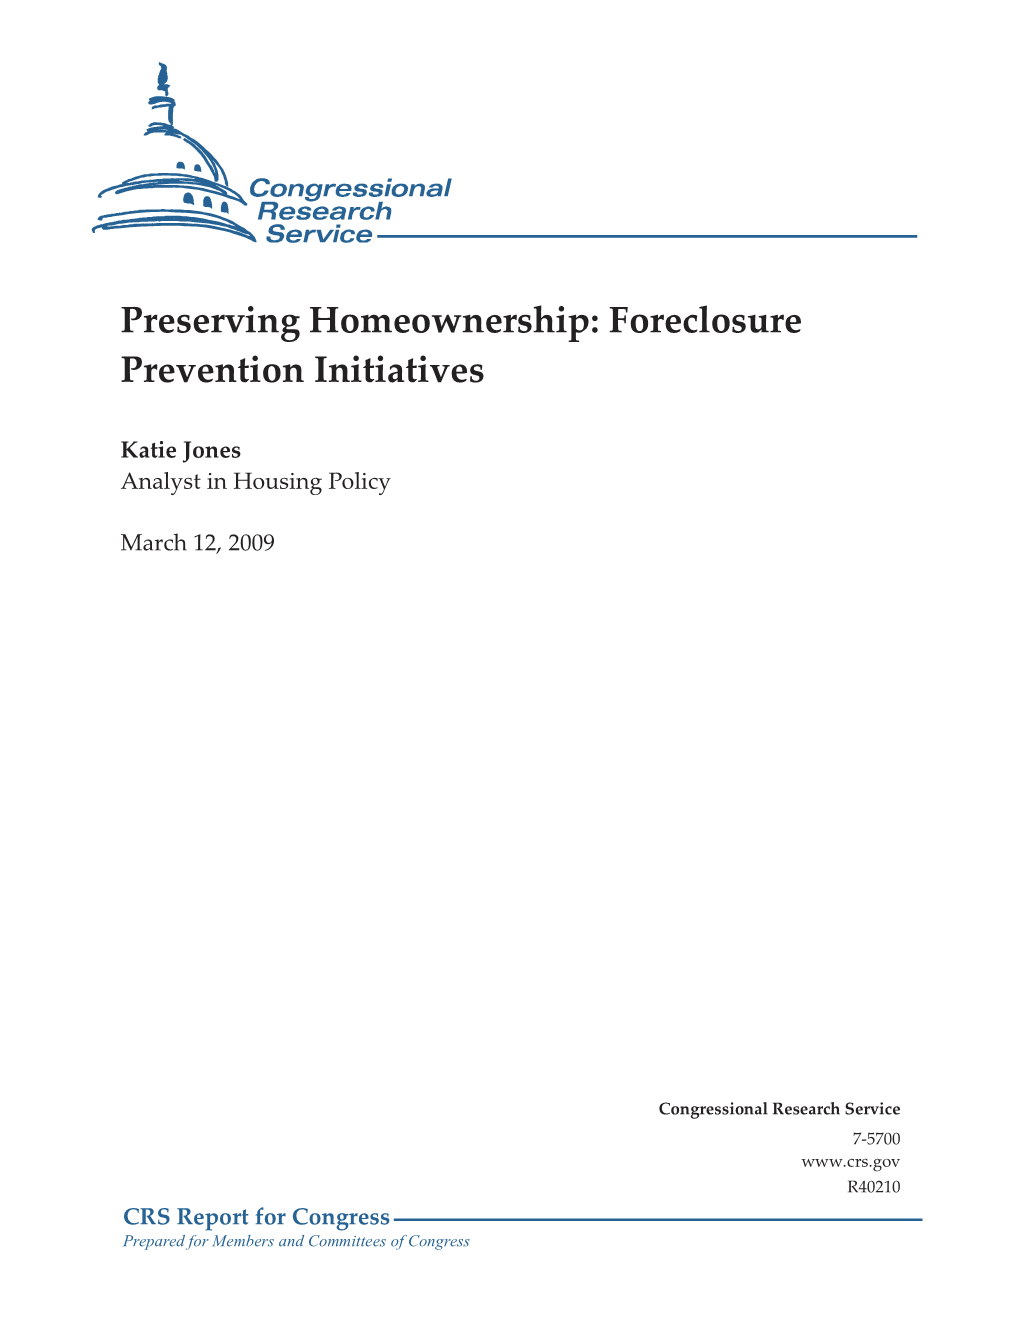 Foreclosure Prevention Initiatives